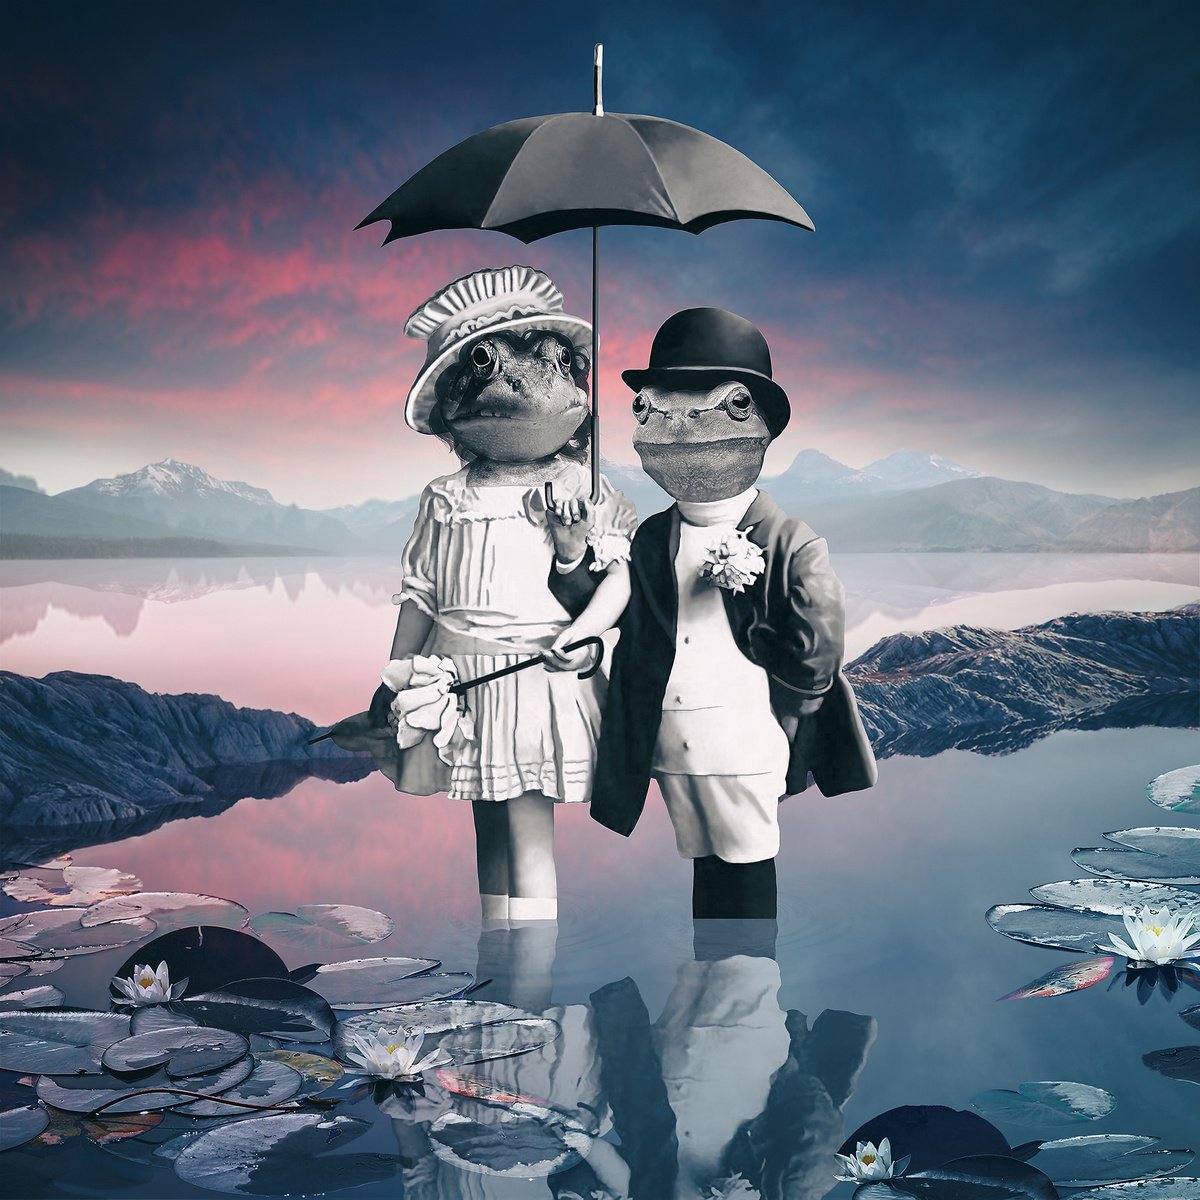 Summer rain by Yuliia Savenko